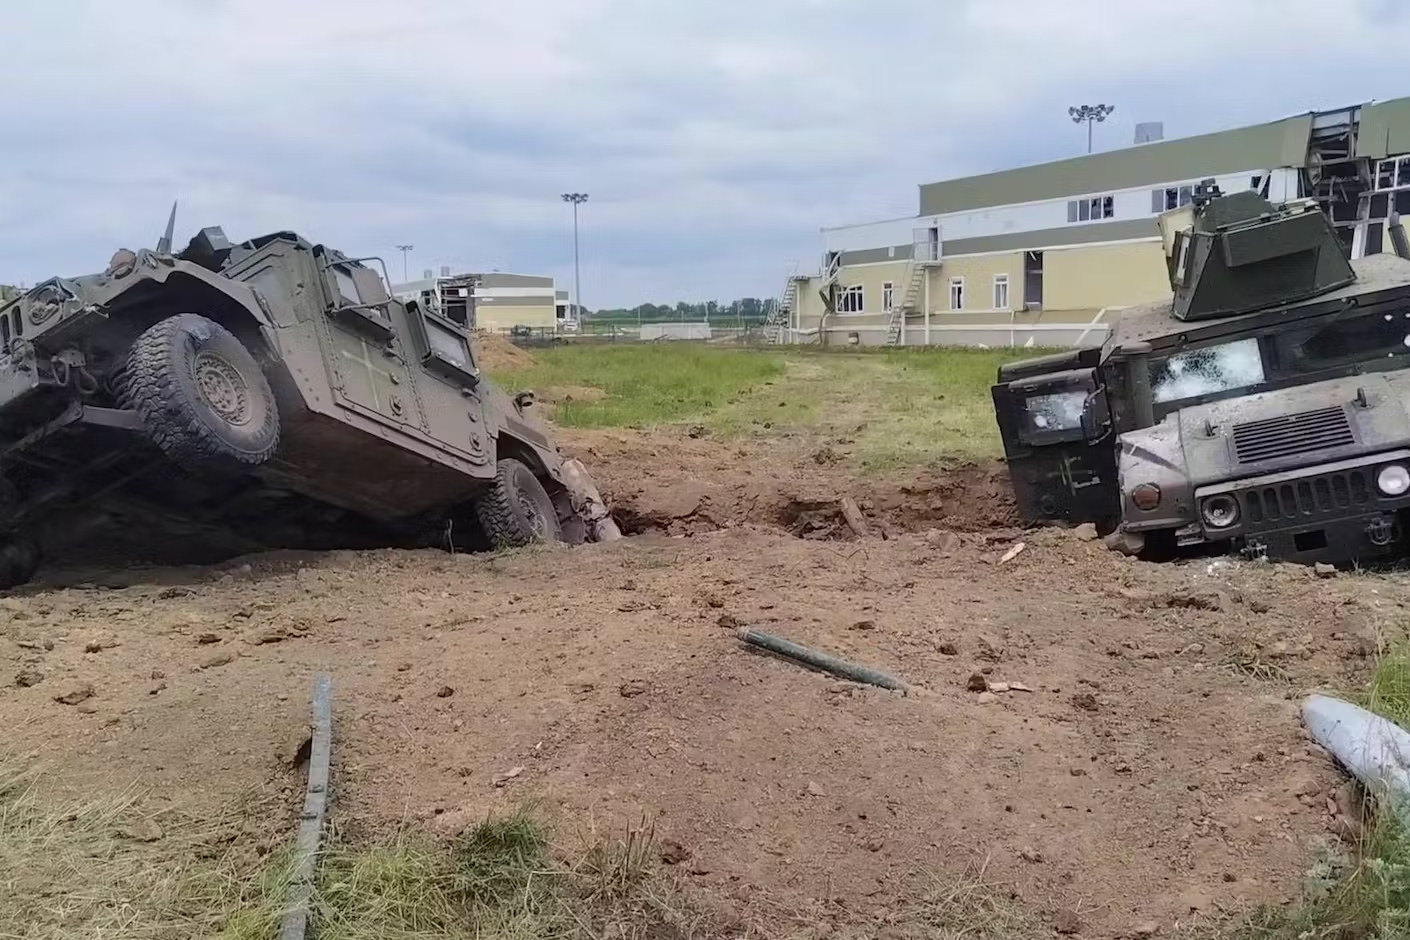 US Military Vehicles Involved in Belgorod Border Clash